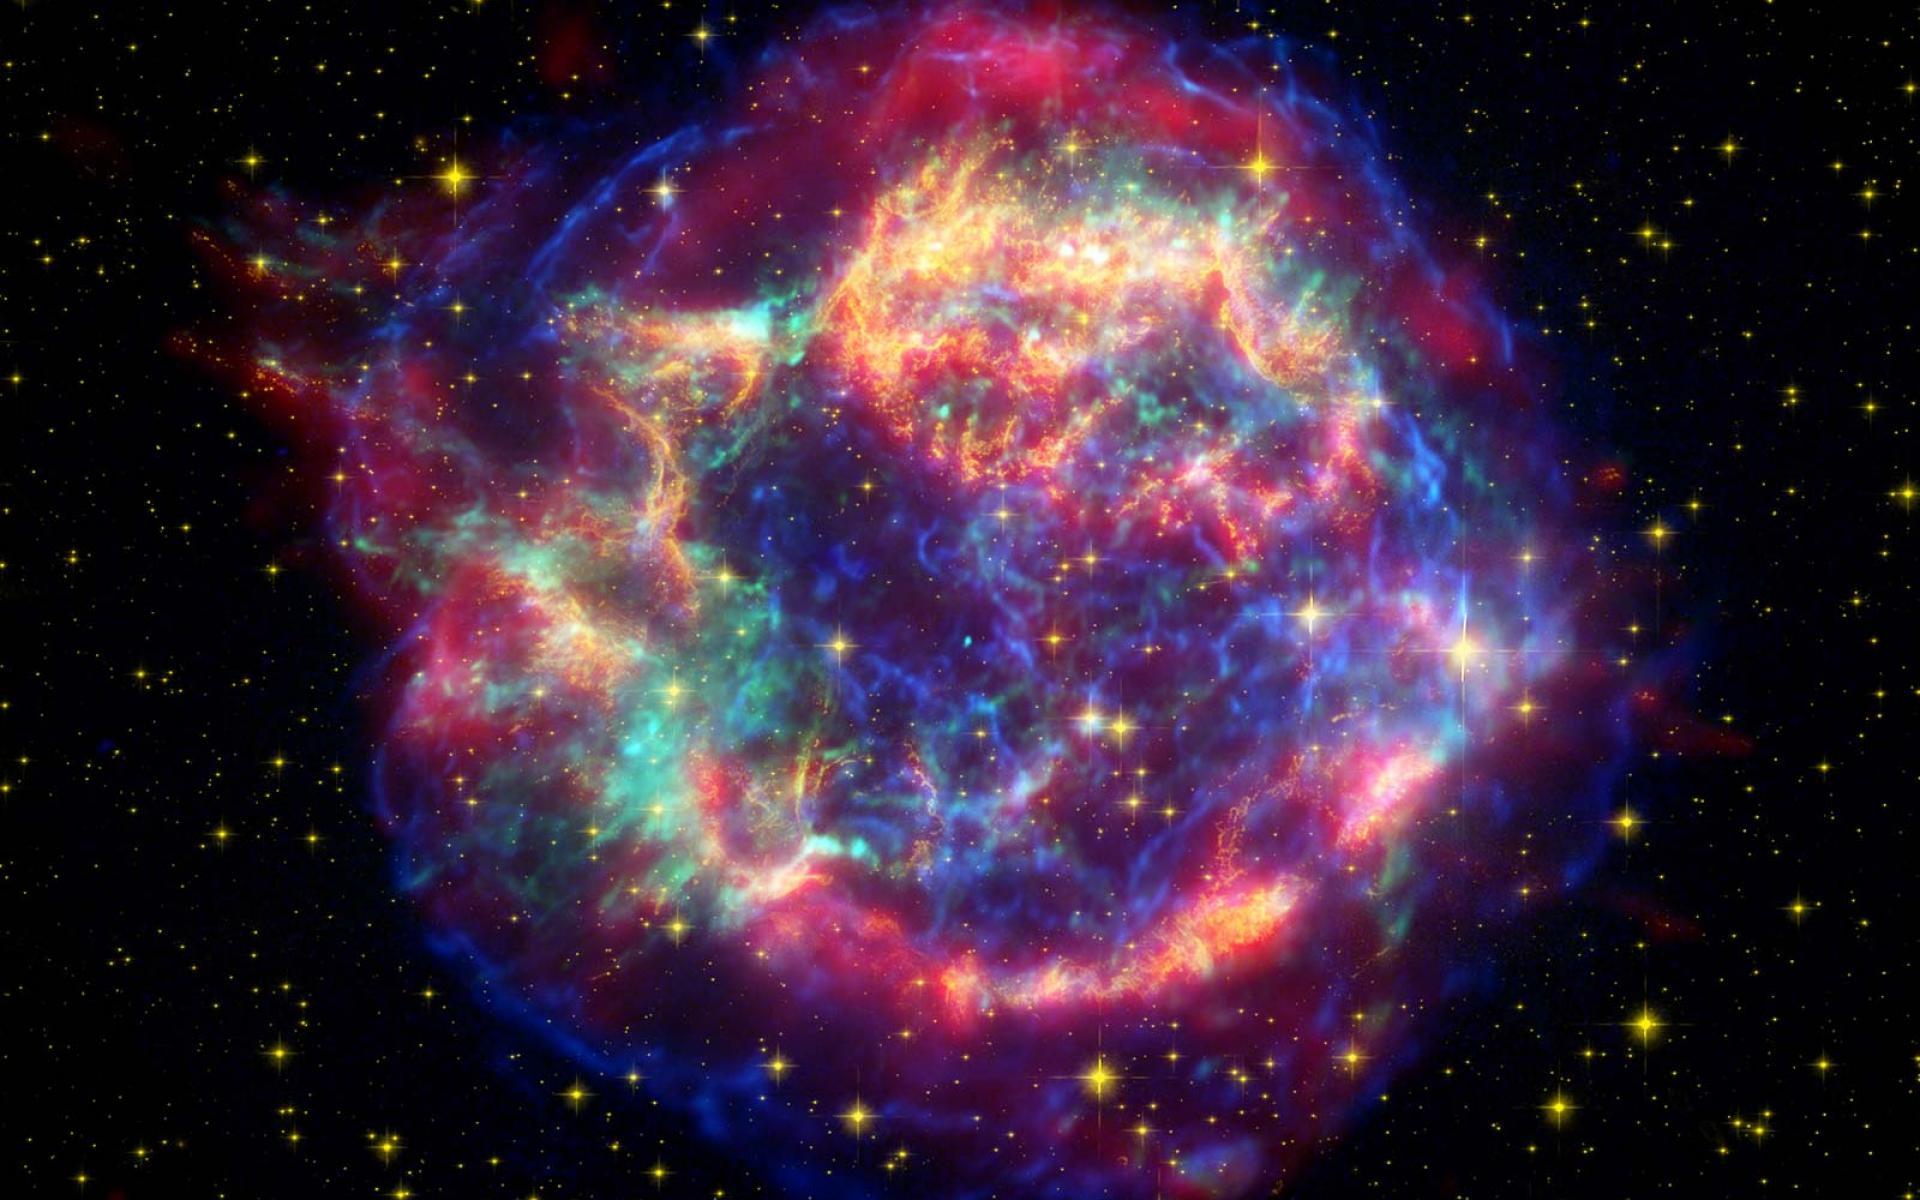 Supernova Wallpaper